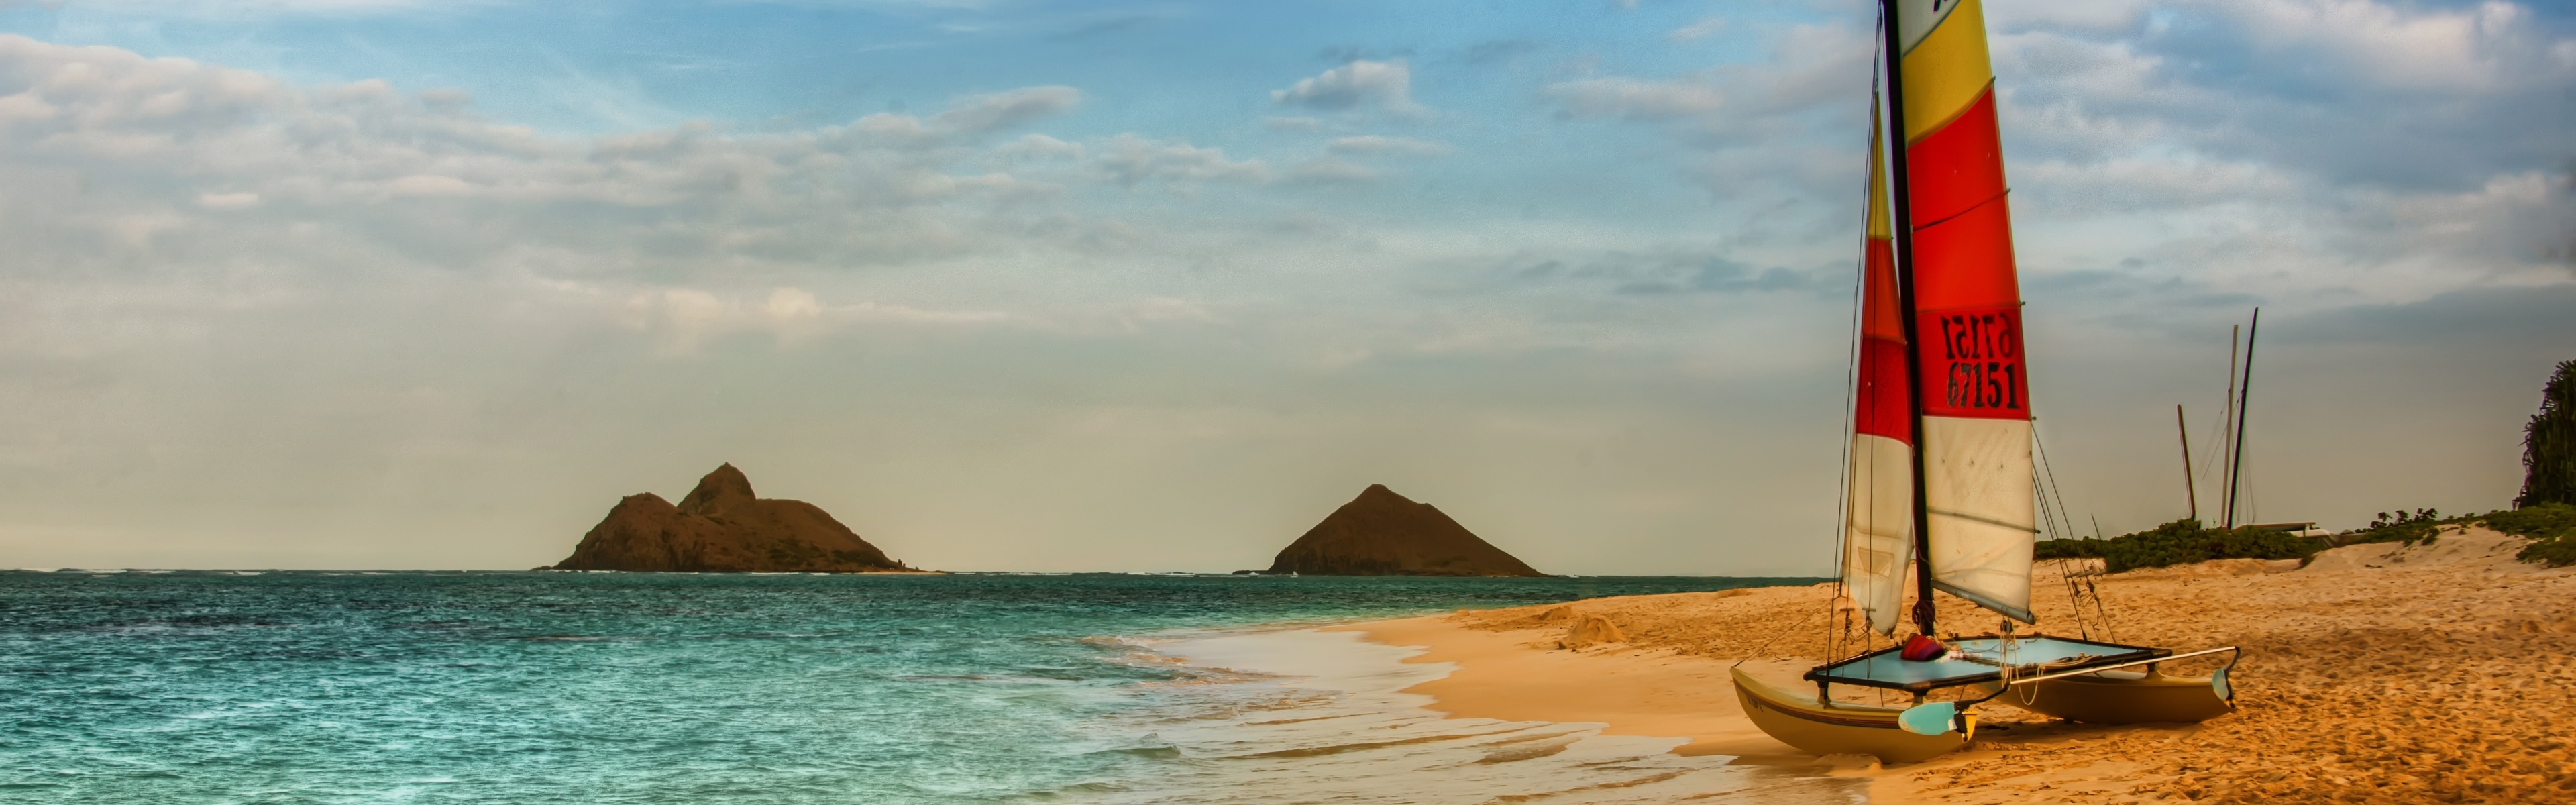 On Oahu Beach iPhone Panoramic Wallpaper iPad